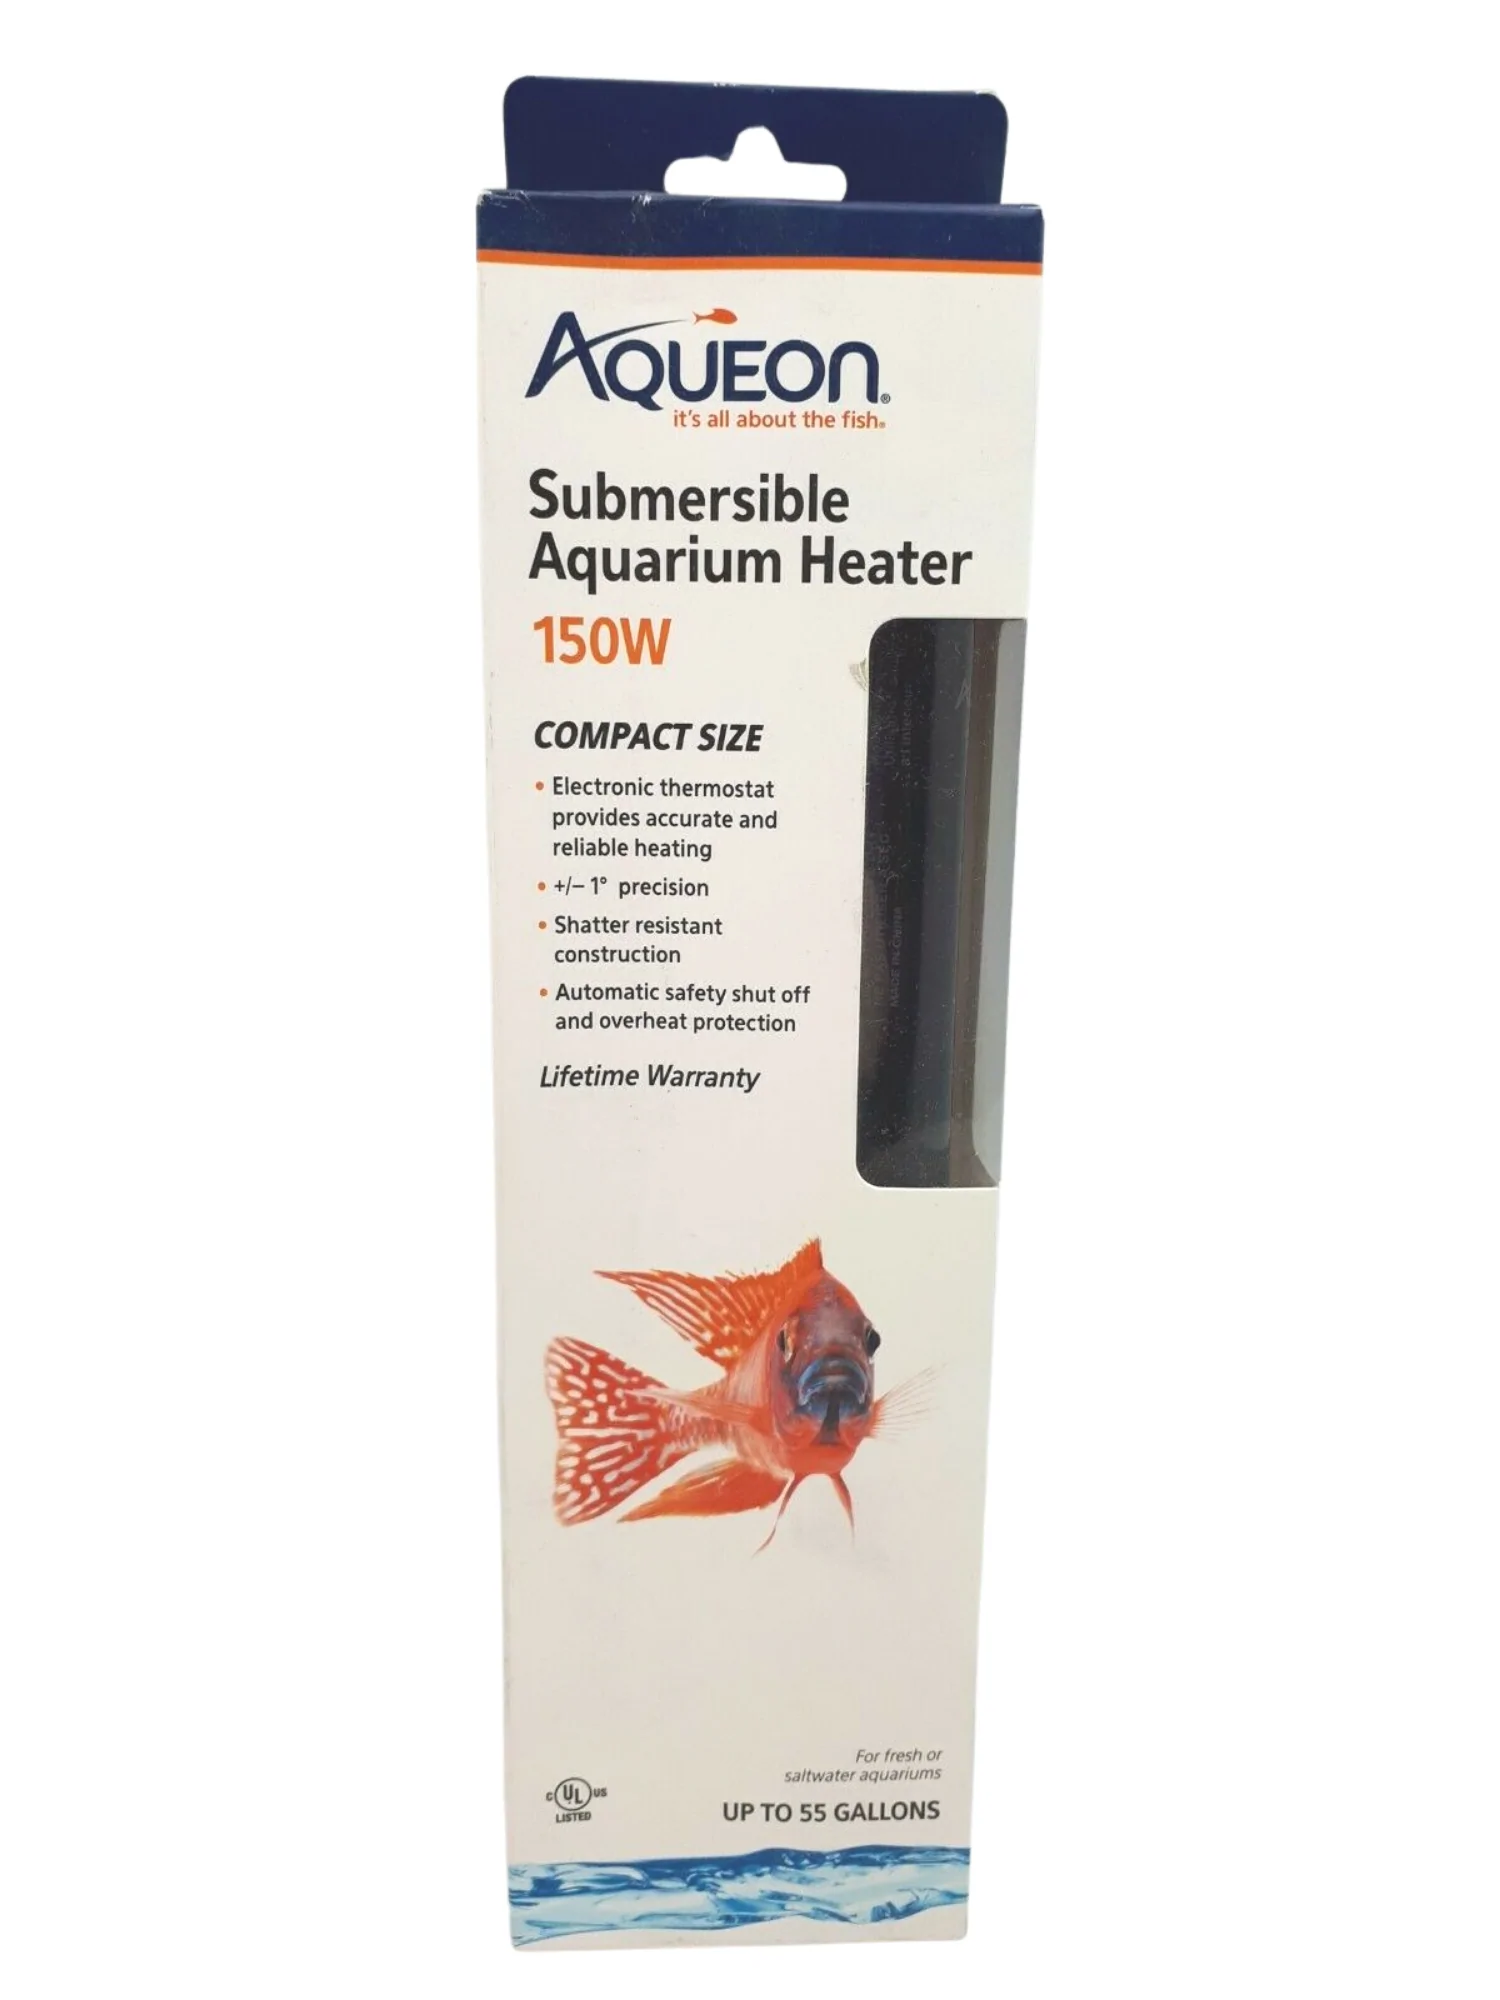 Aqueon Submersible Aquarium Heater / 150W / Up to 55 Gal **DEALS**